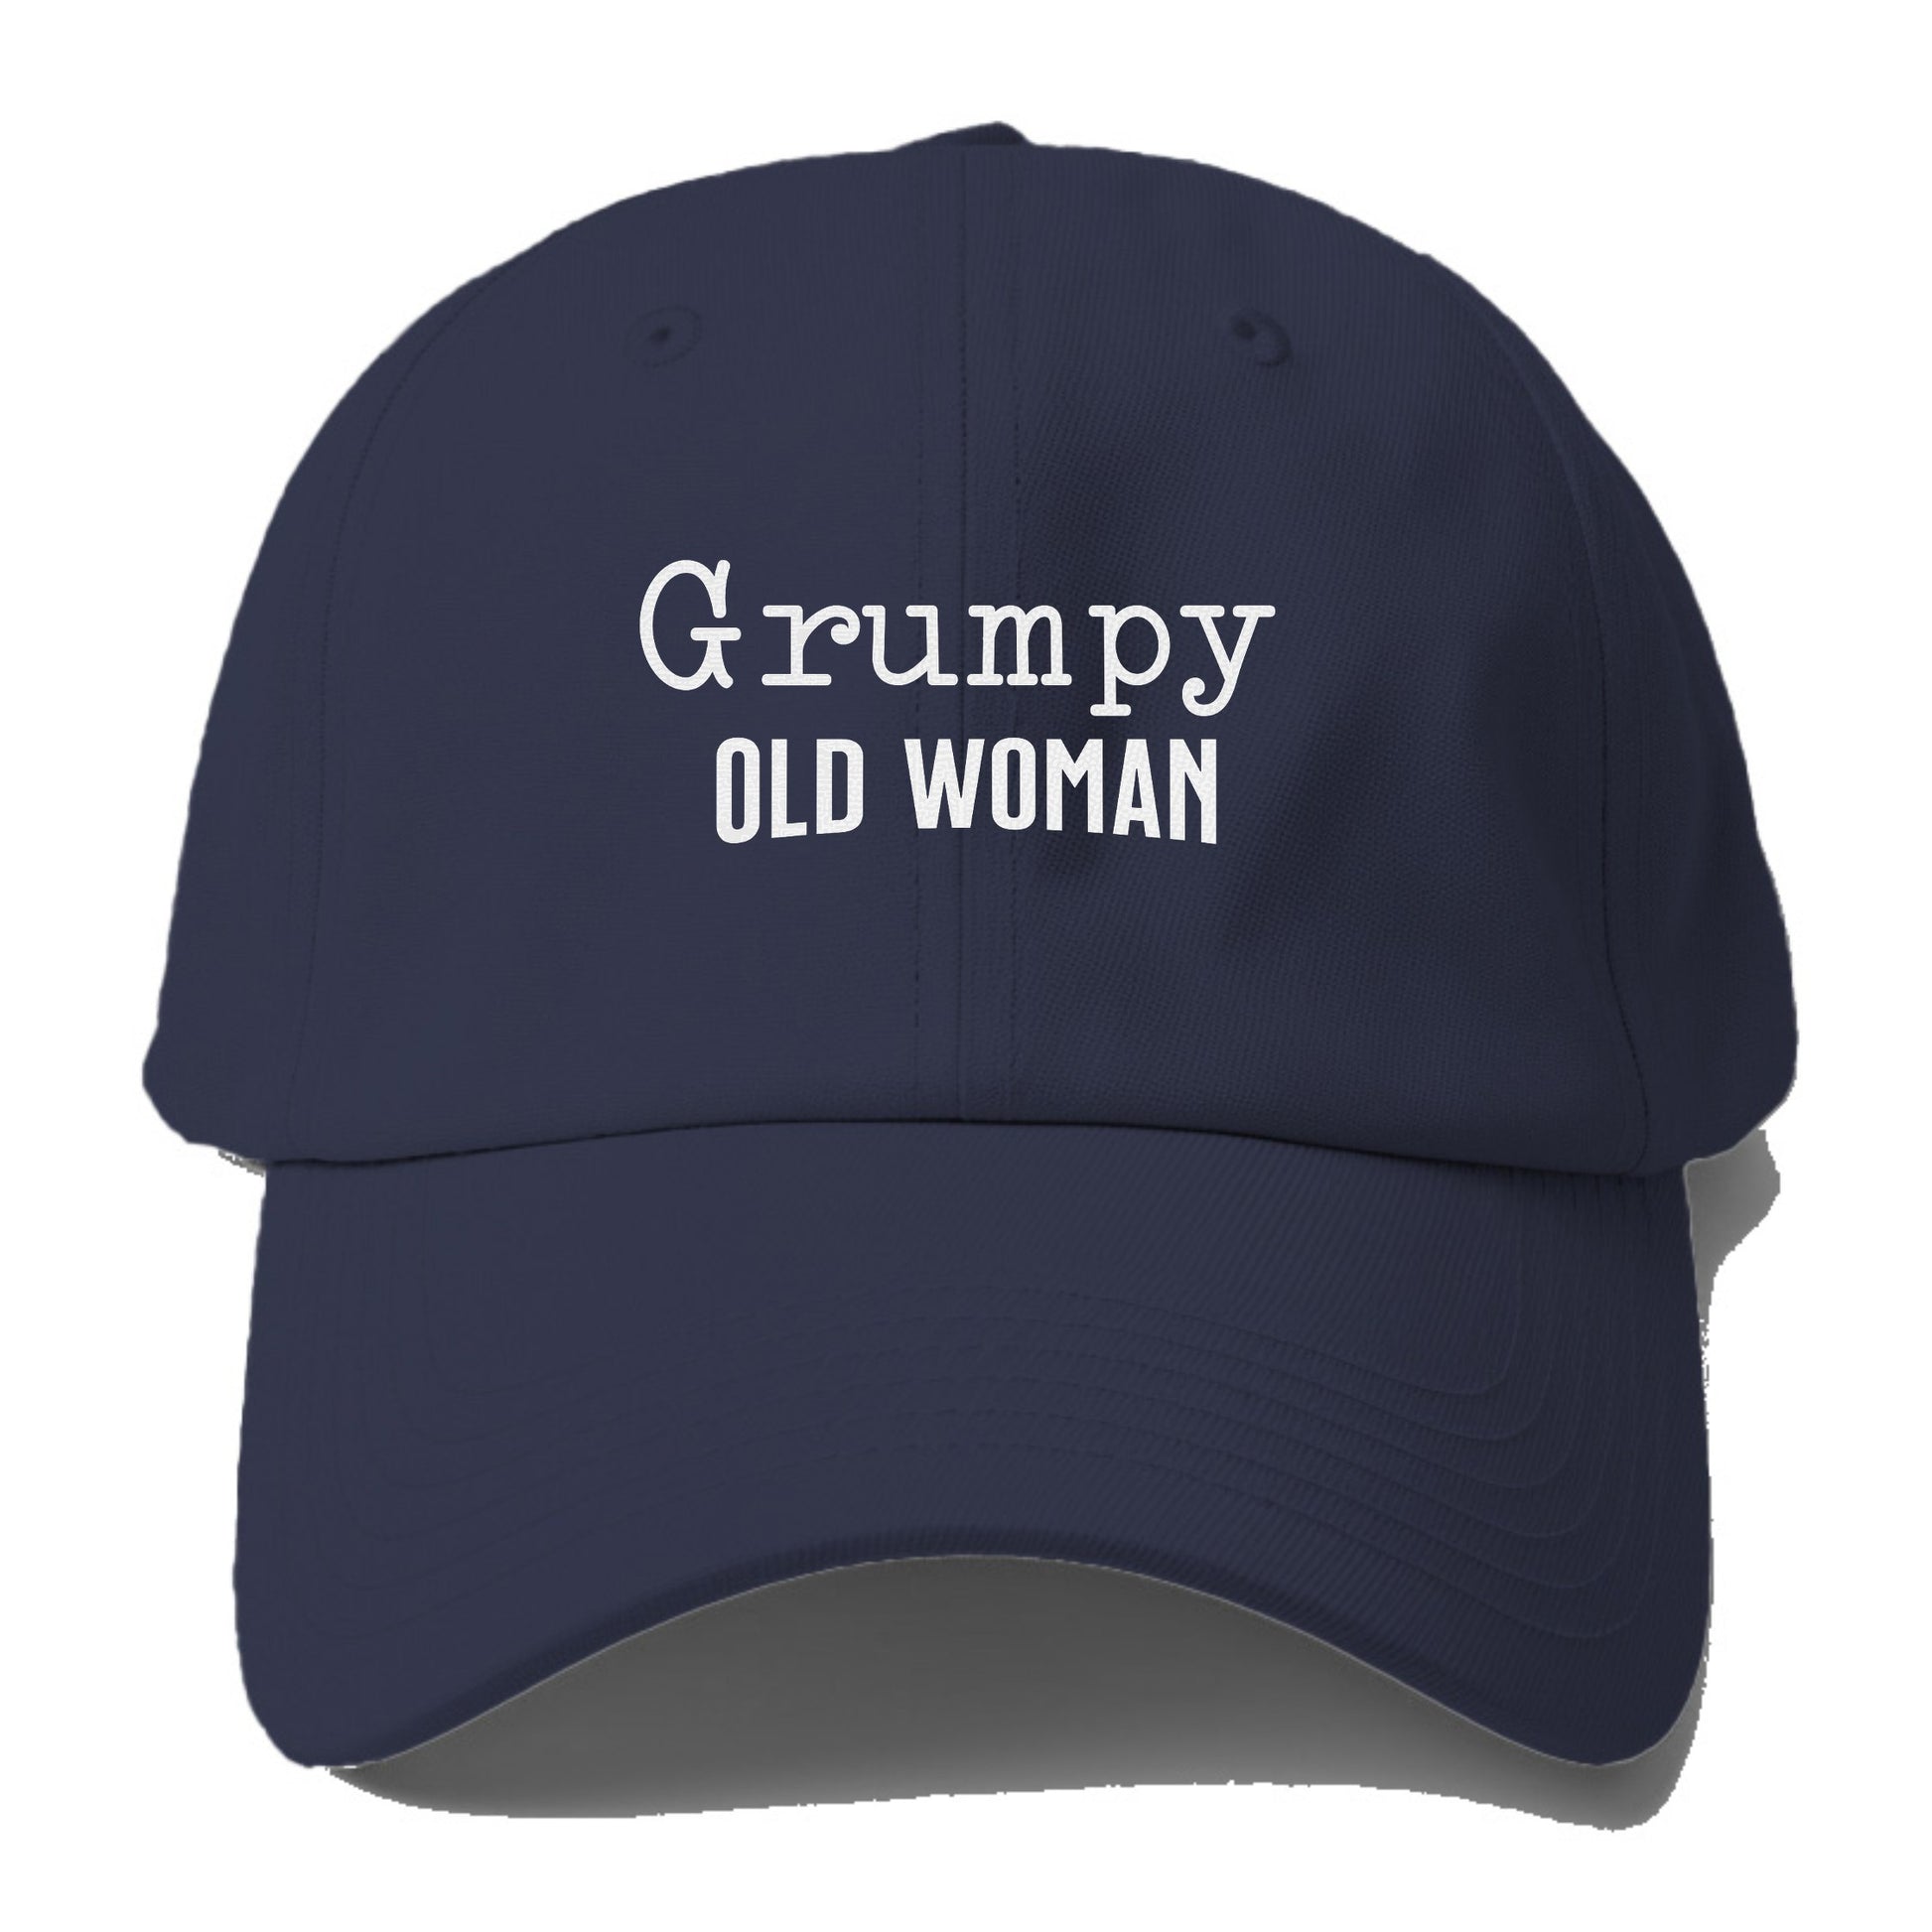 grumpy old woman Hat